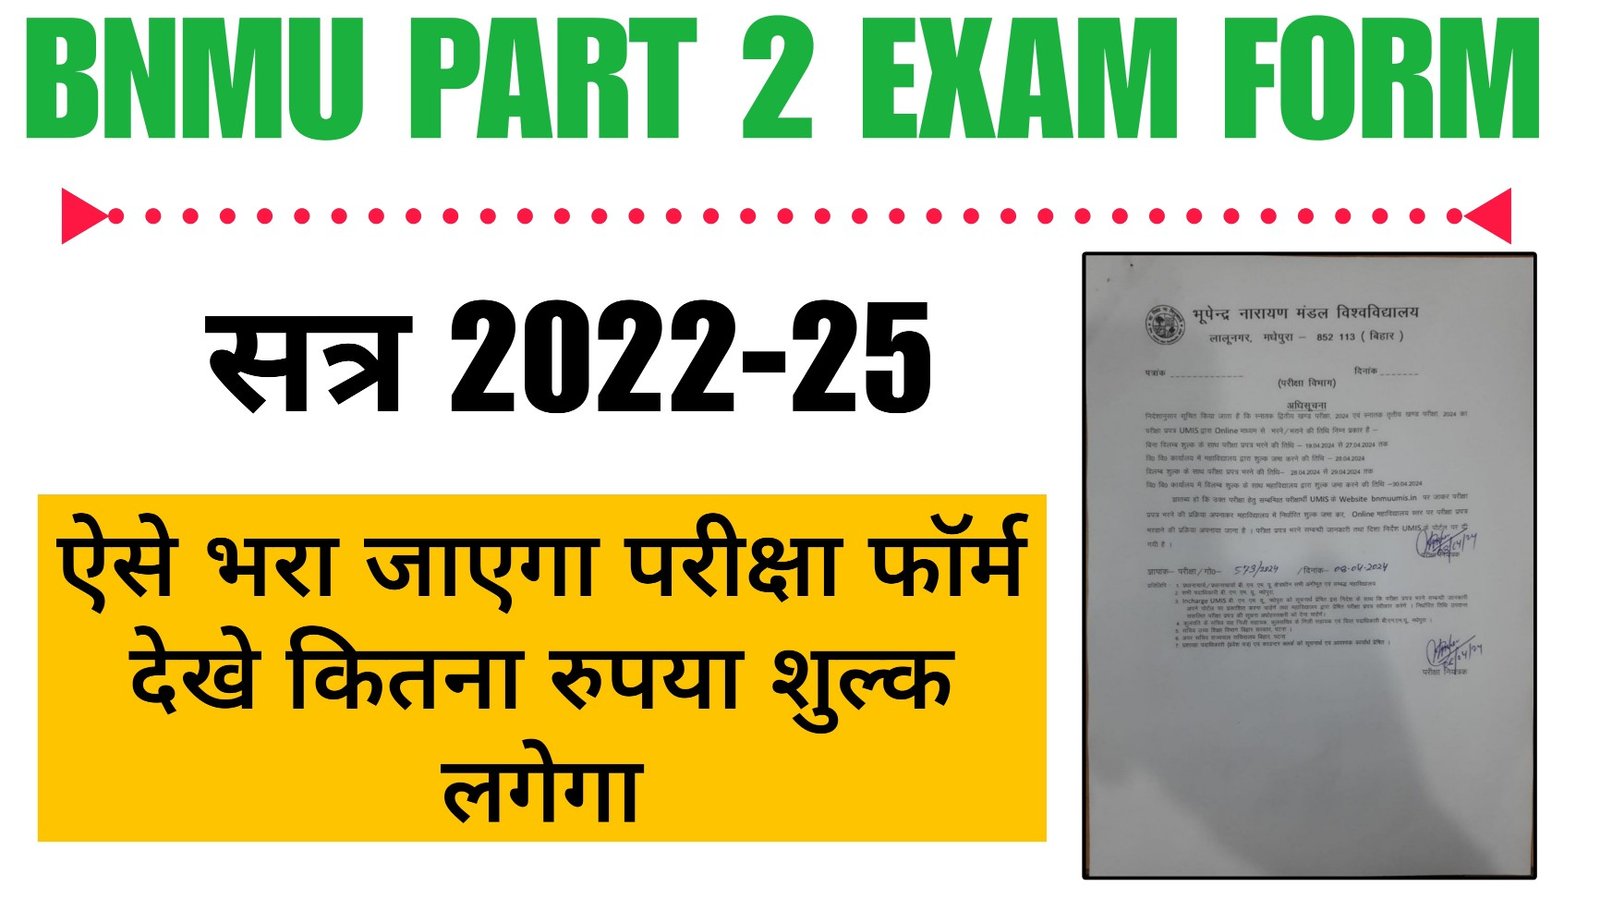 Bnmu Part 2 Exam Form 2022-25